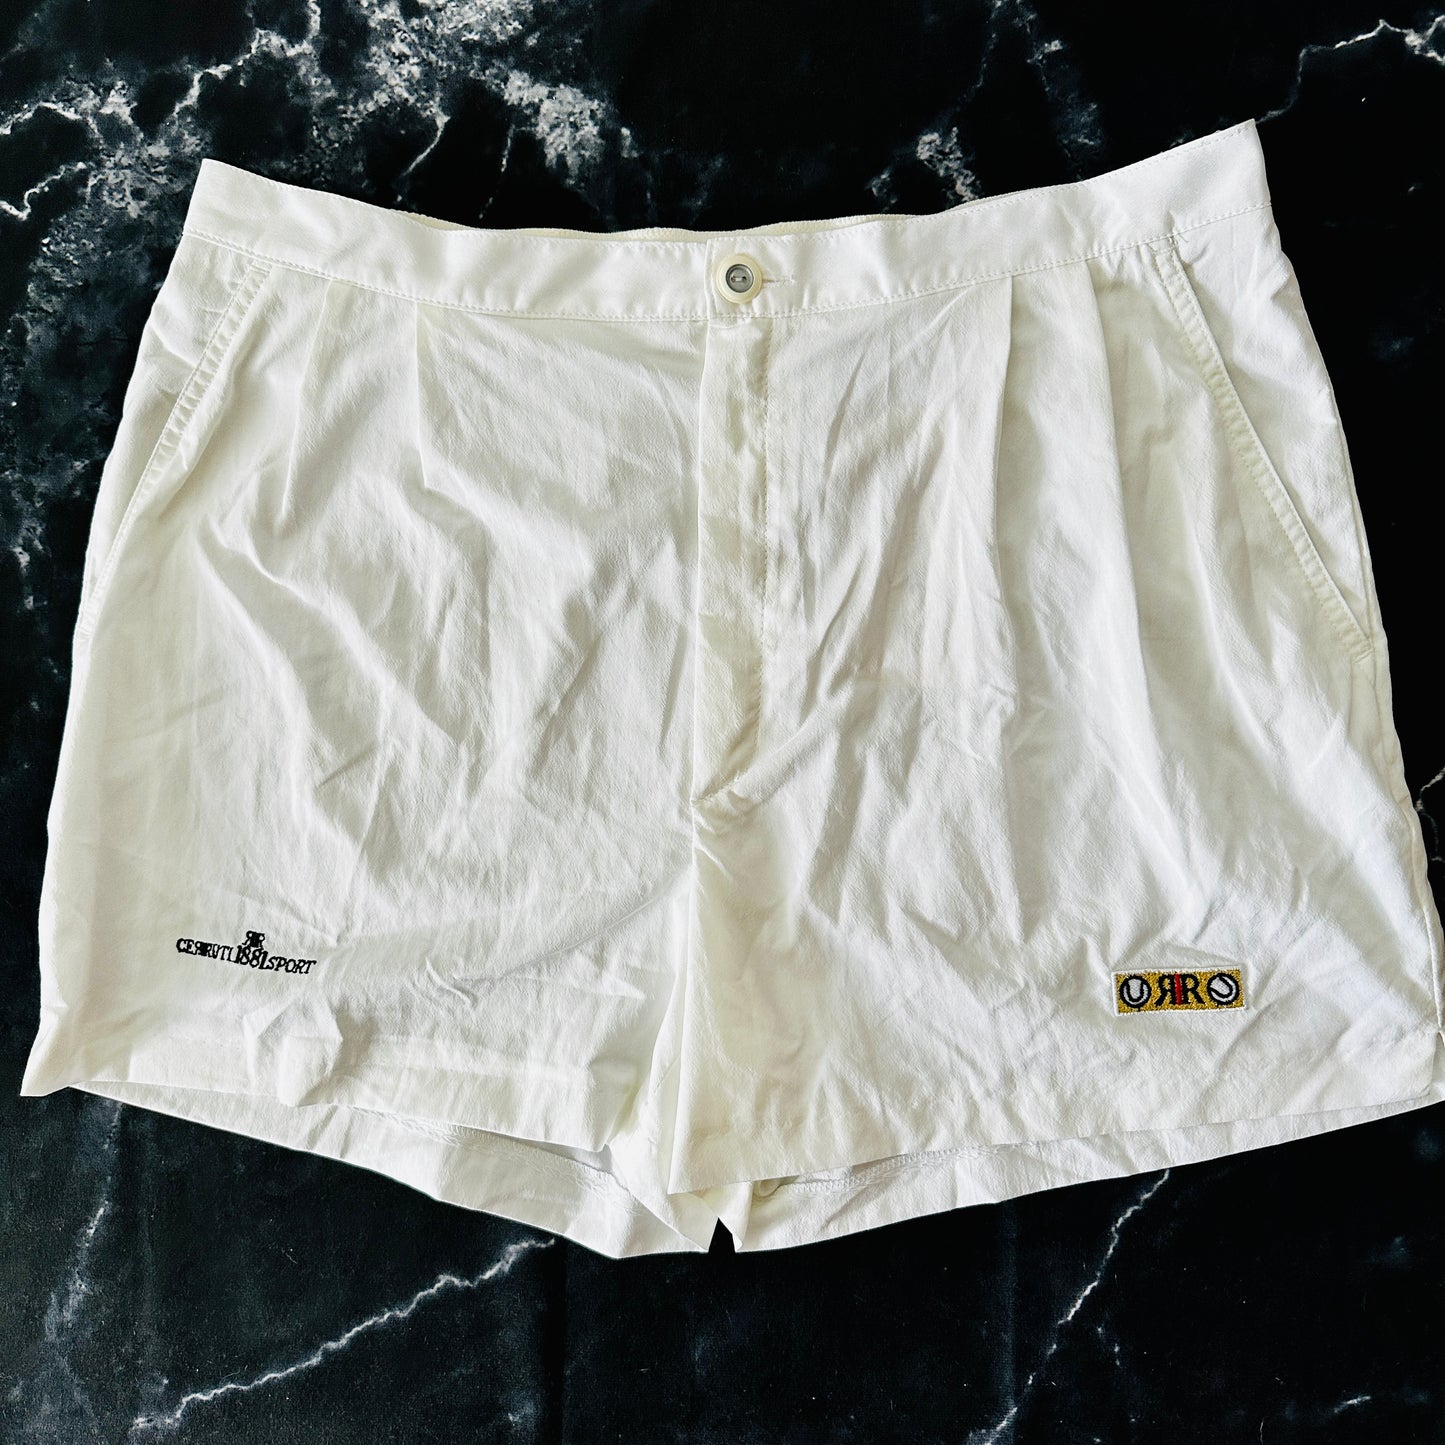 Cerrutti Sport 80s Tennis Shorts - 56 / XL - Made in Italy - BNWT